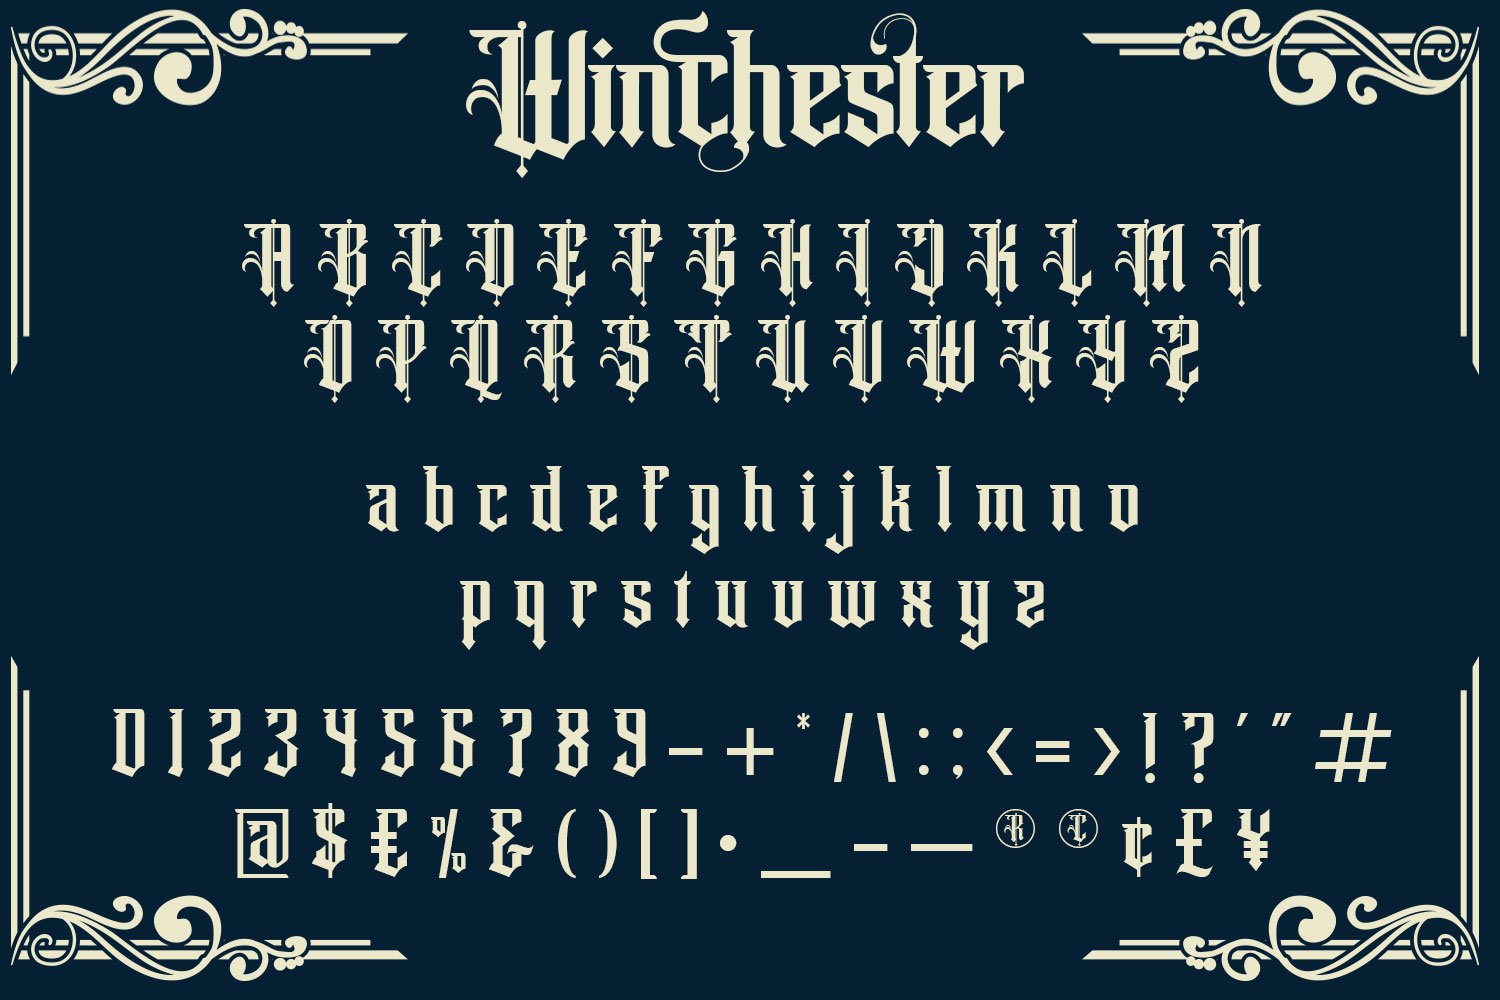 winchester vintage label typeface font 7 683